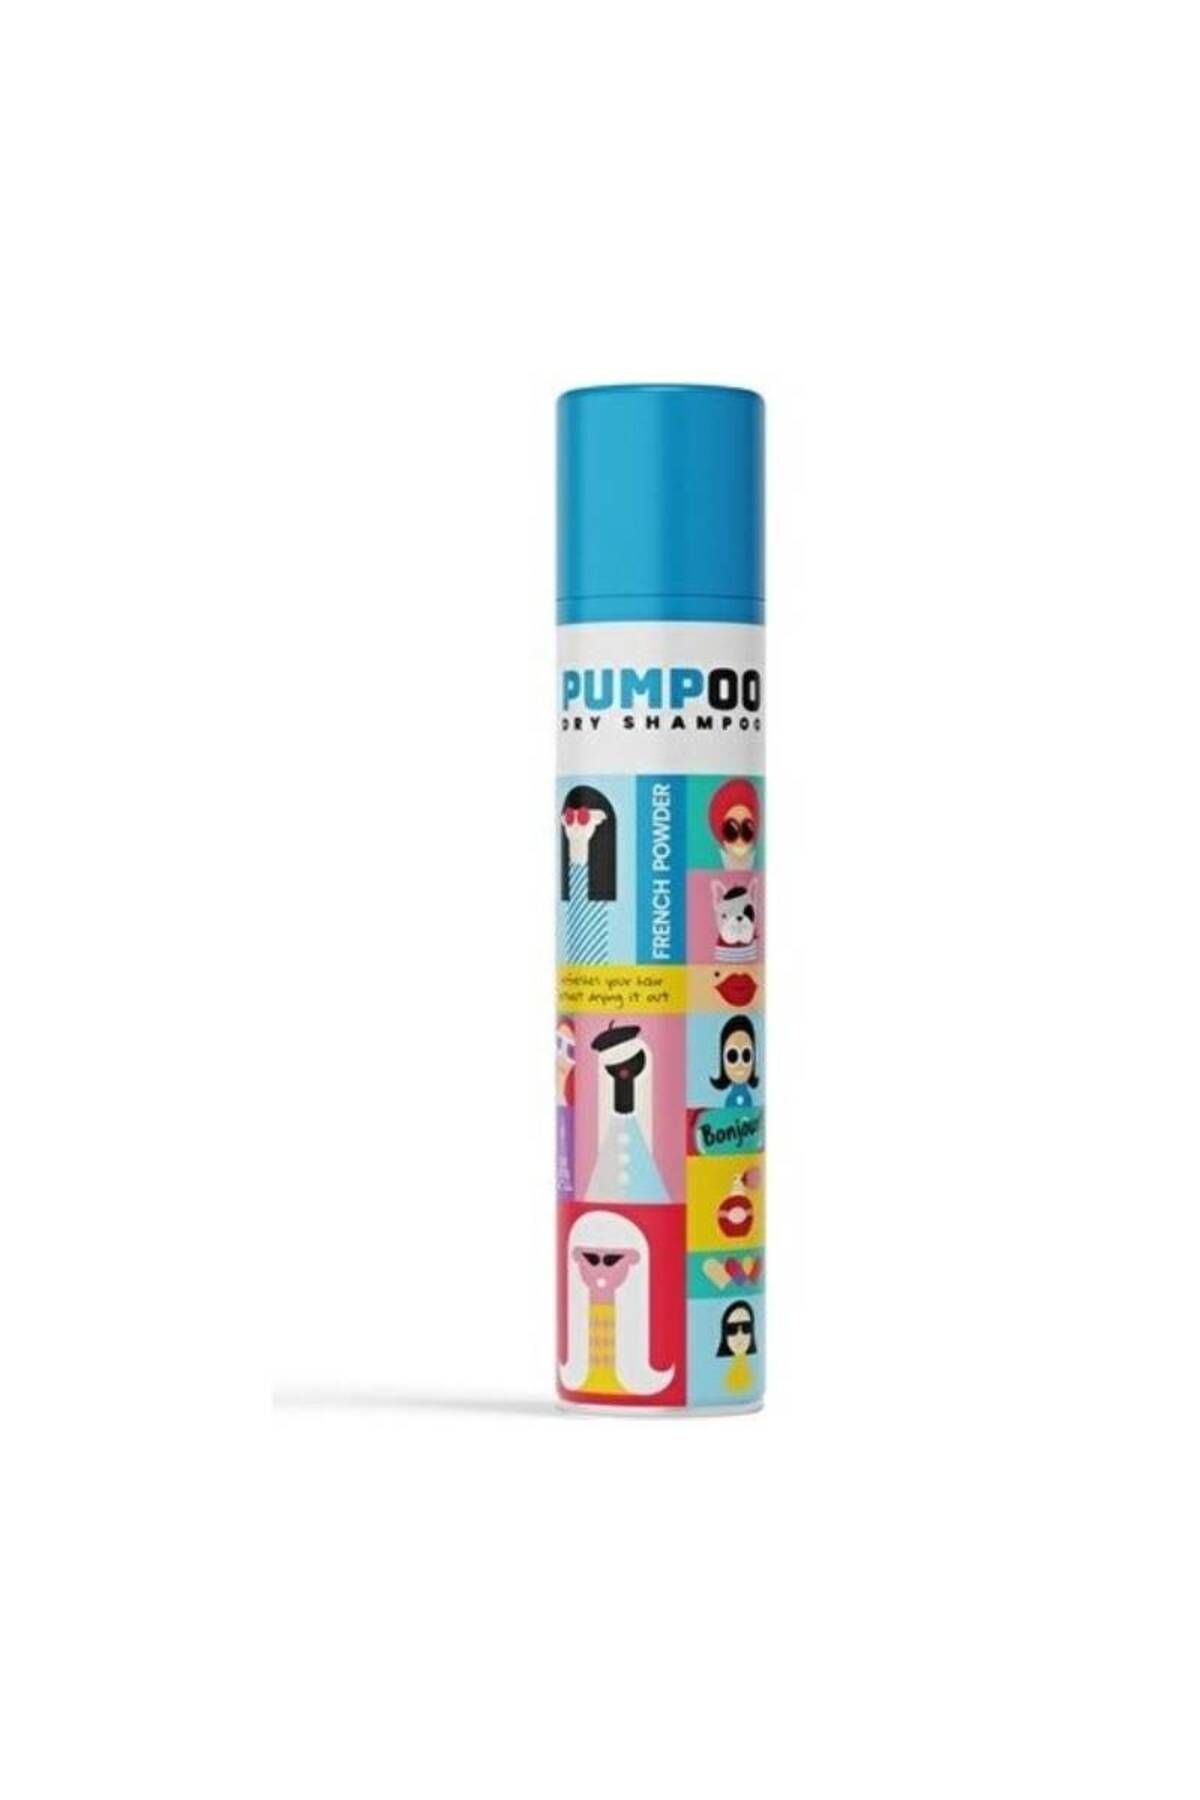 Pumpoo Dry Shampoo - French Powder 200 ml